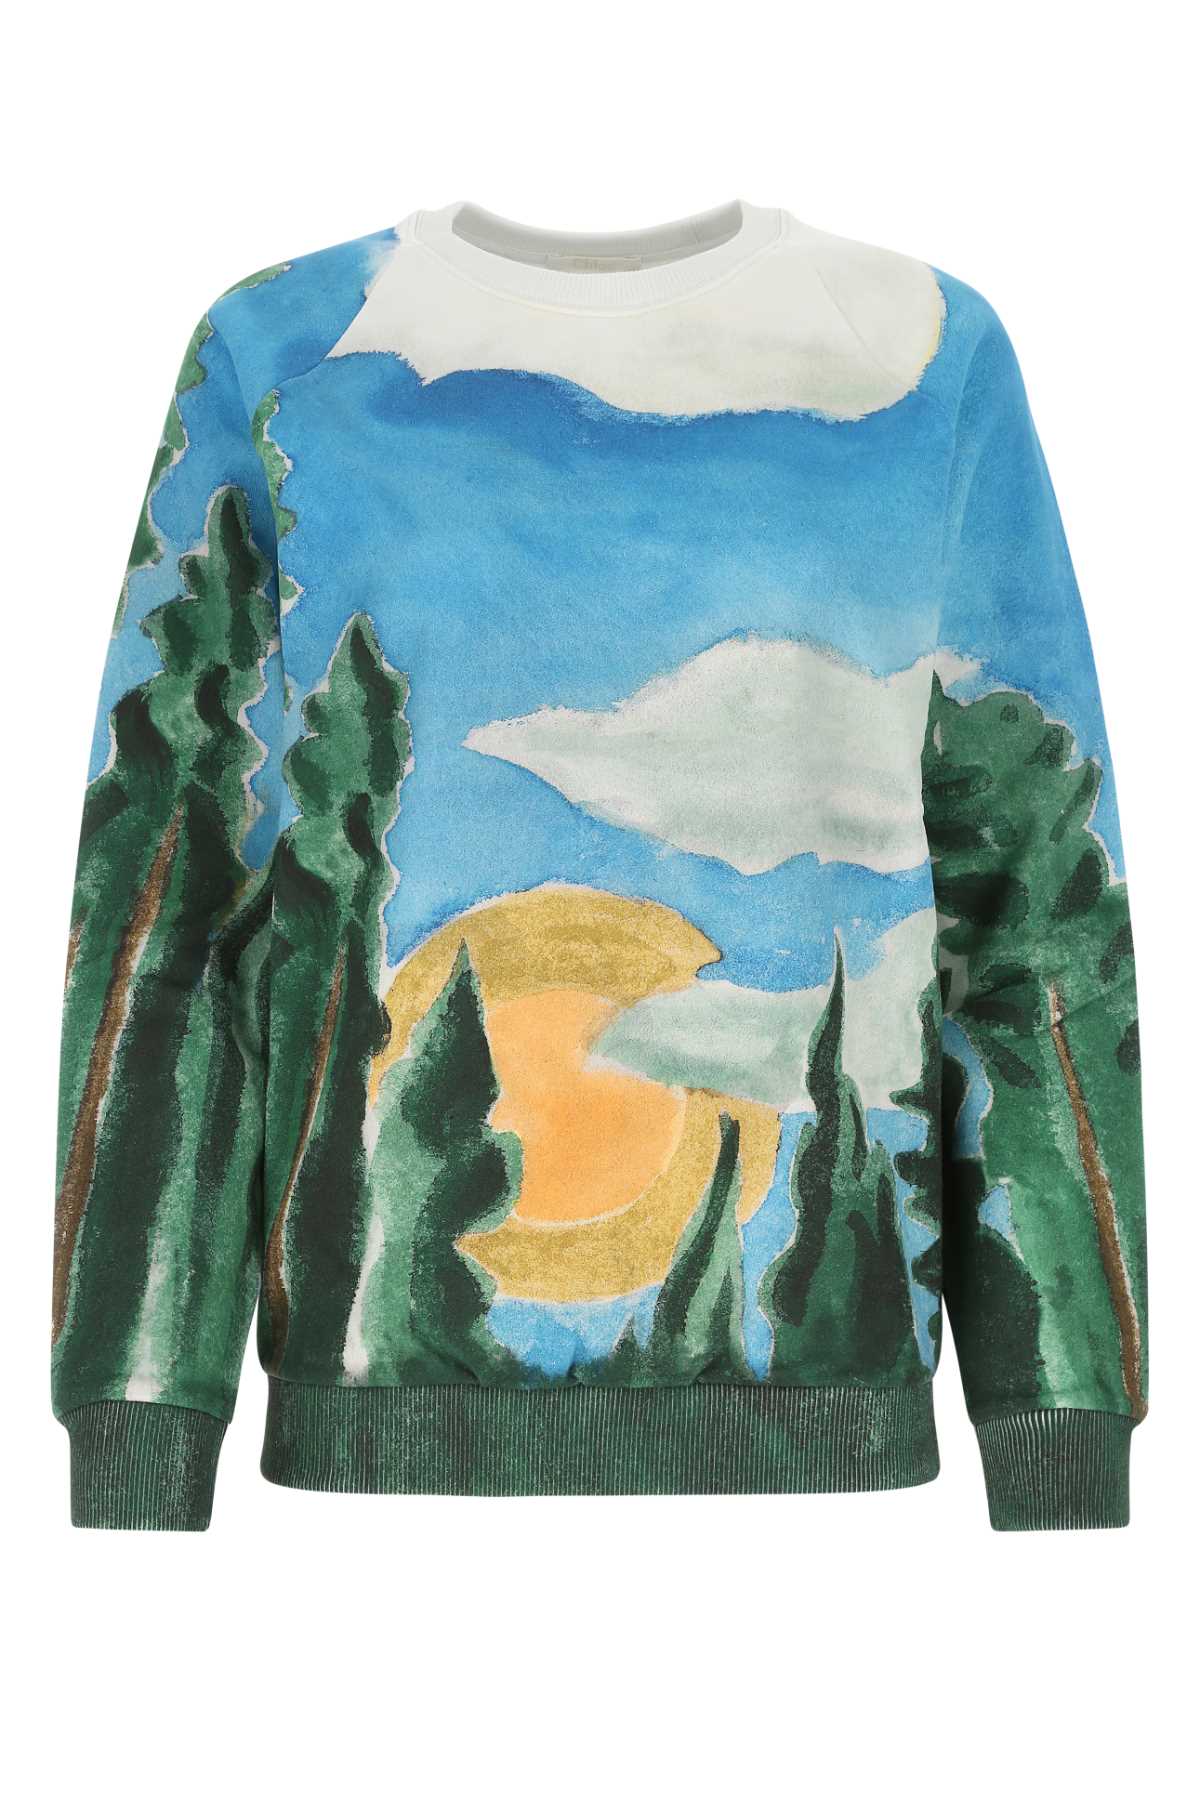 Shop Chloé Printed Cotton Sweatshirt In 39d